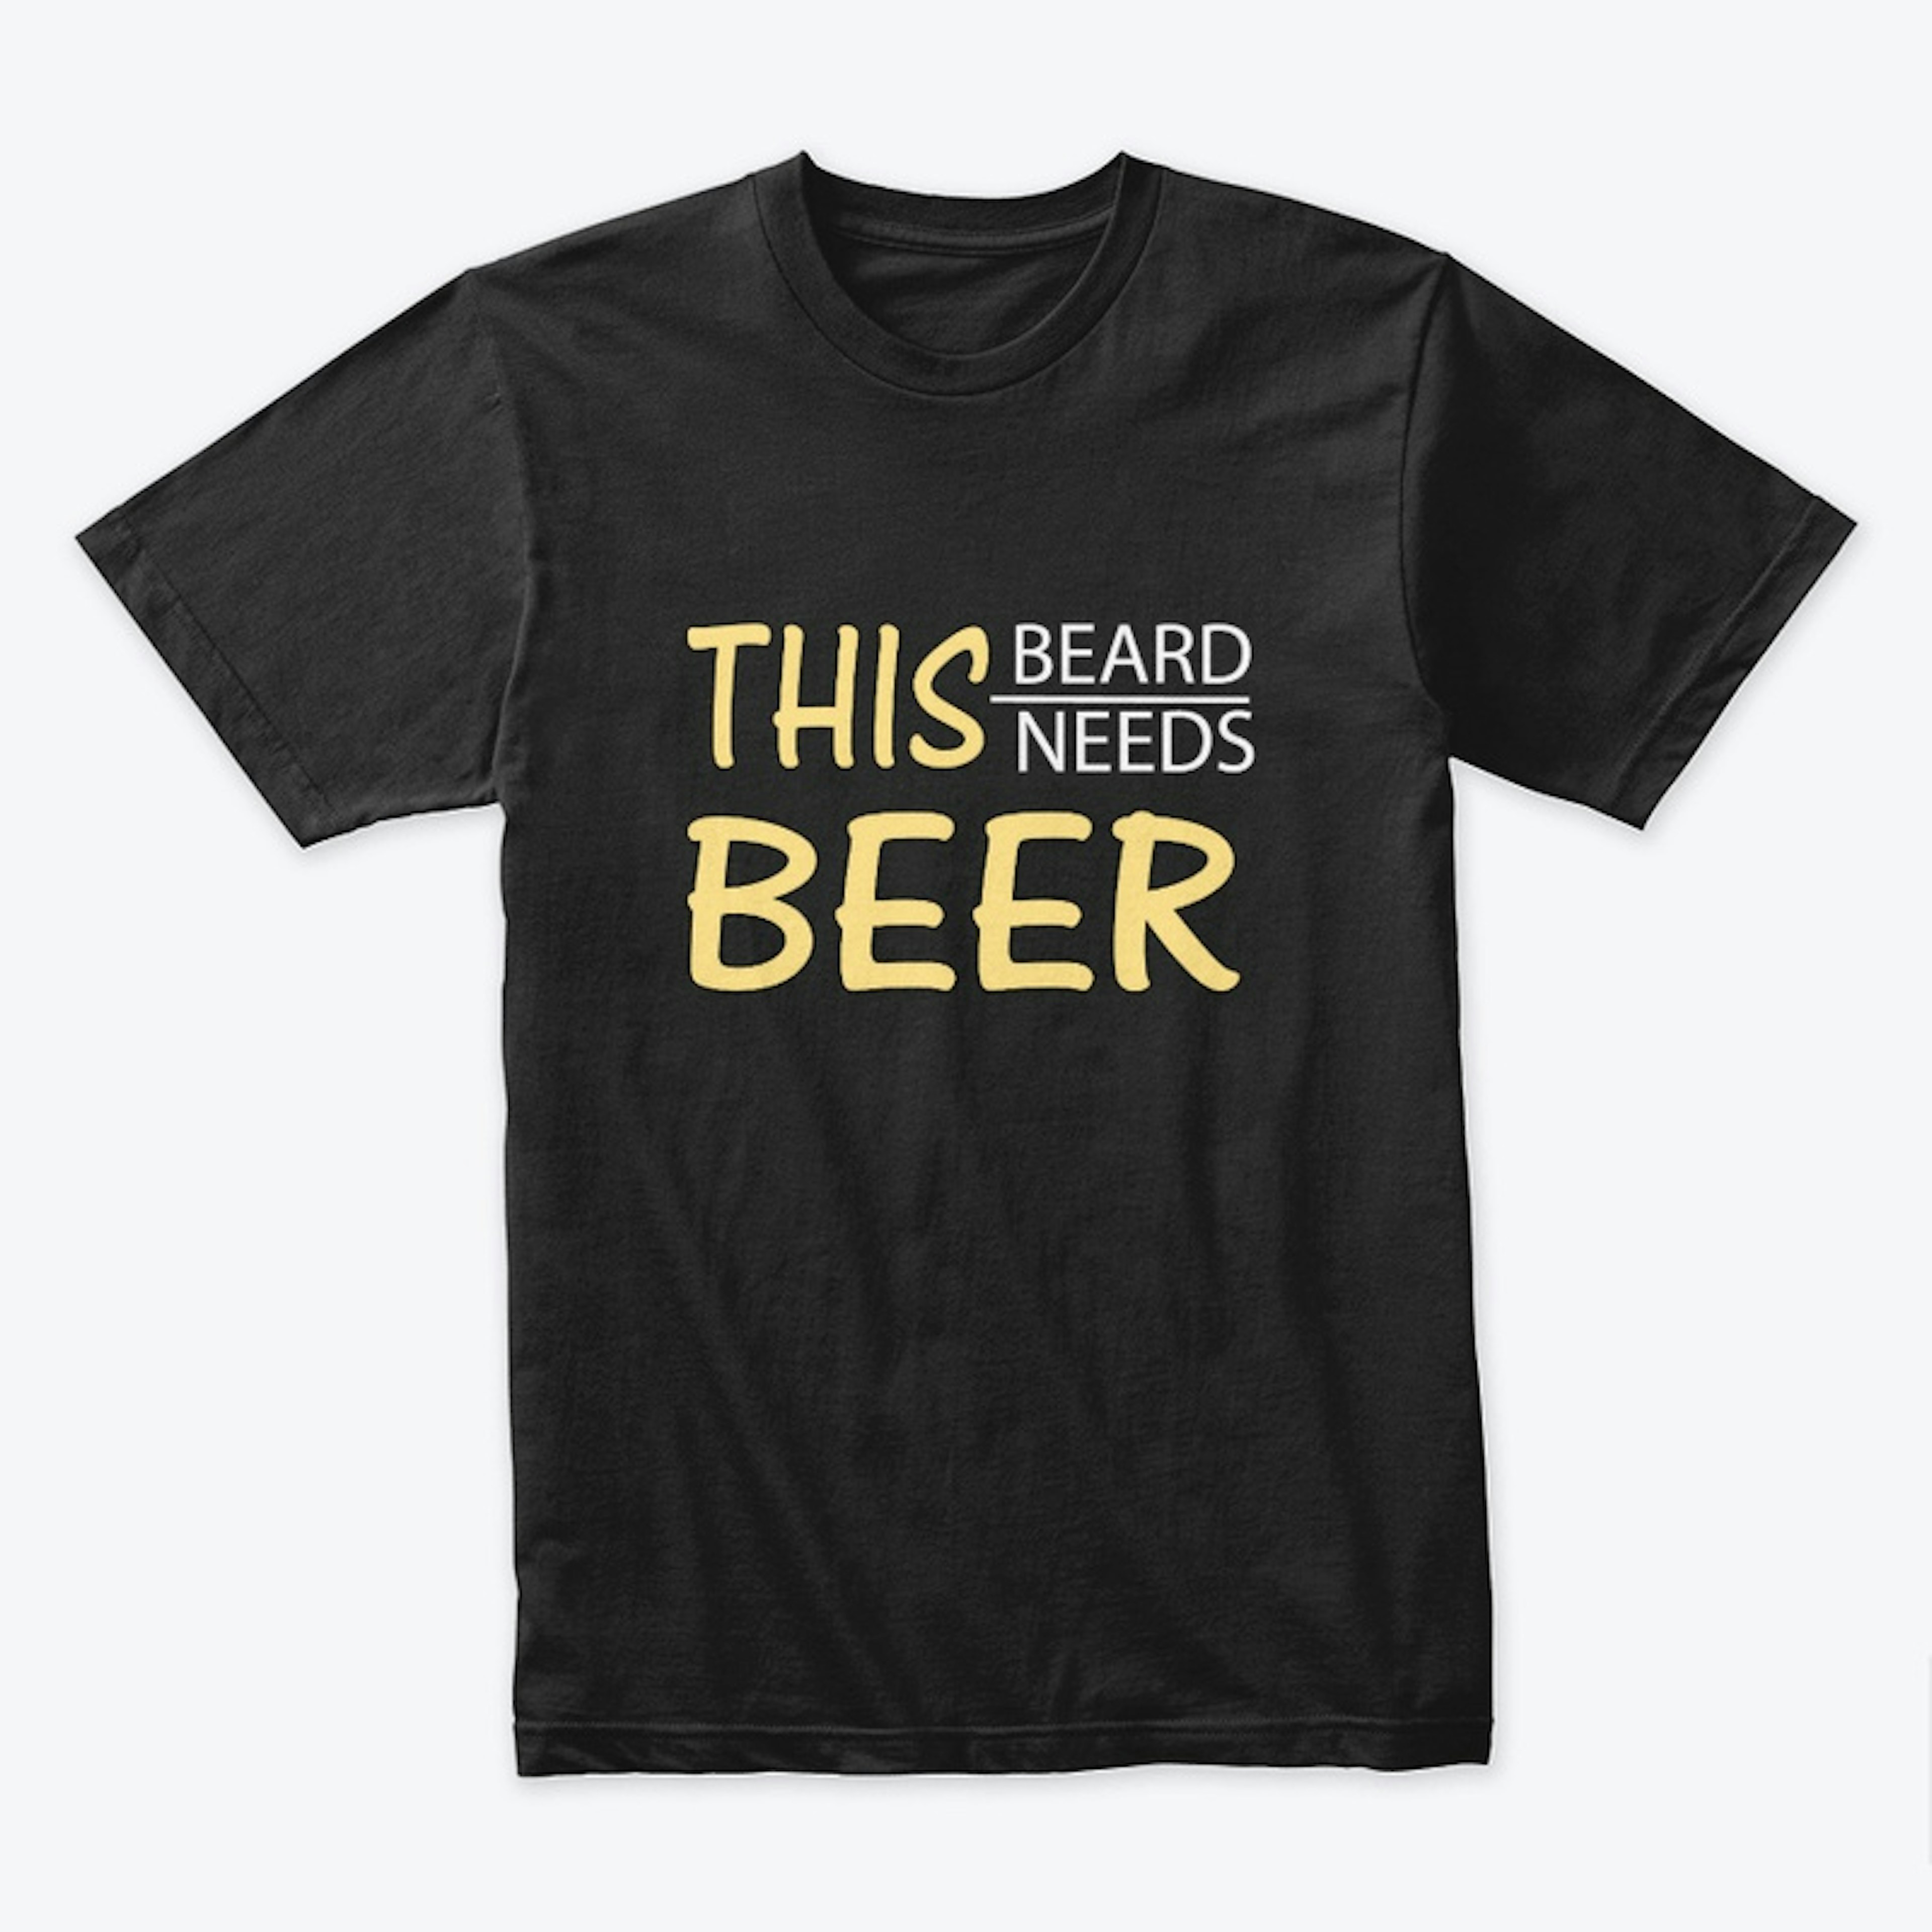 This Beard Needs Beer - Beard T-shirt